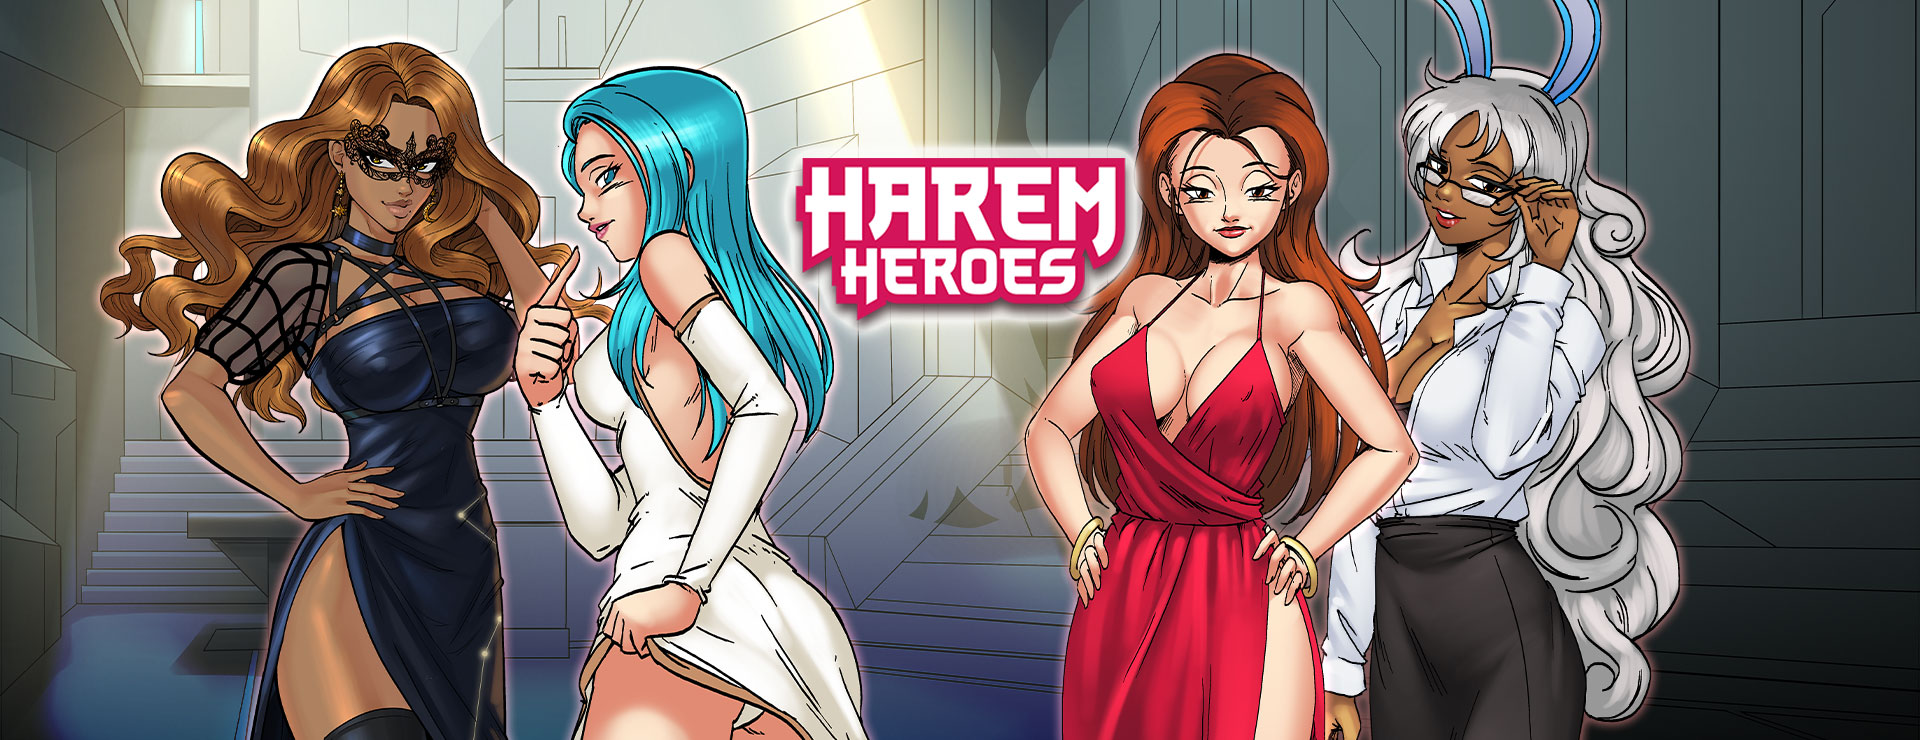 Harem Heroes Game - アクションアドベンチャー ゲーム